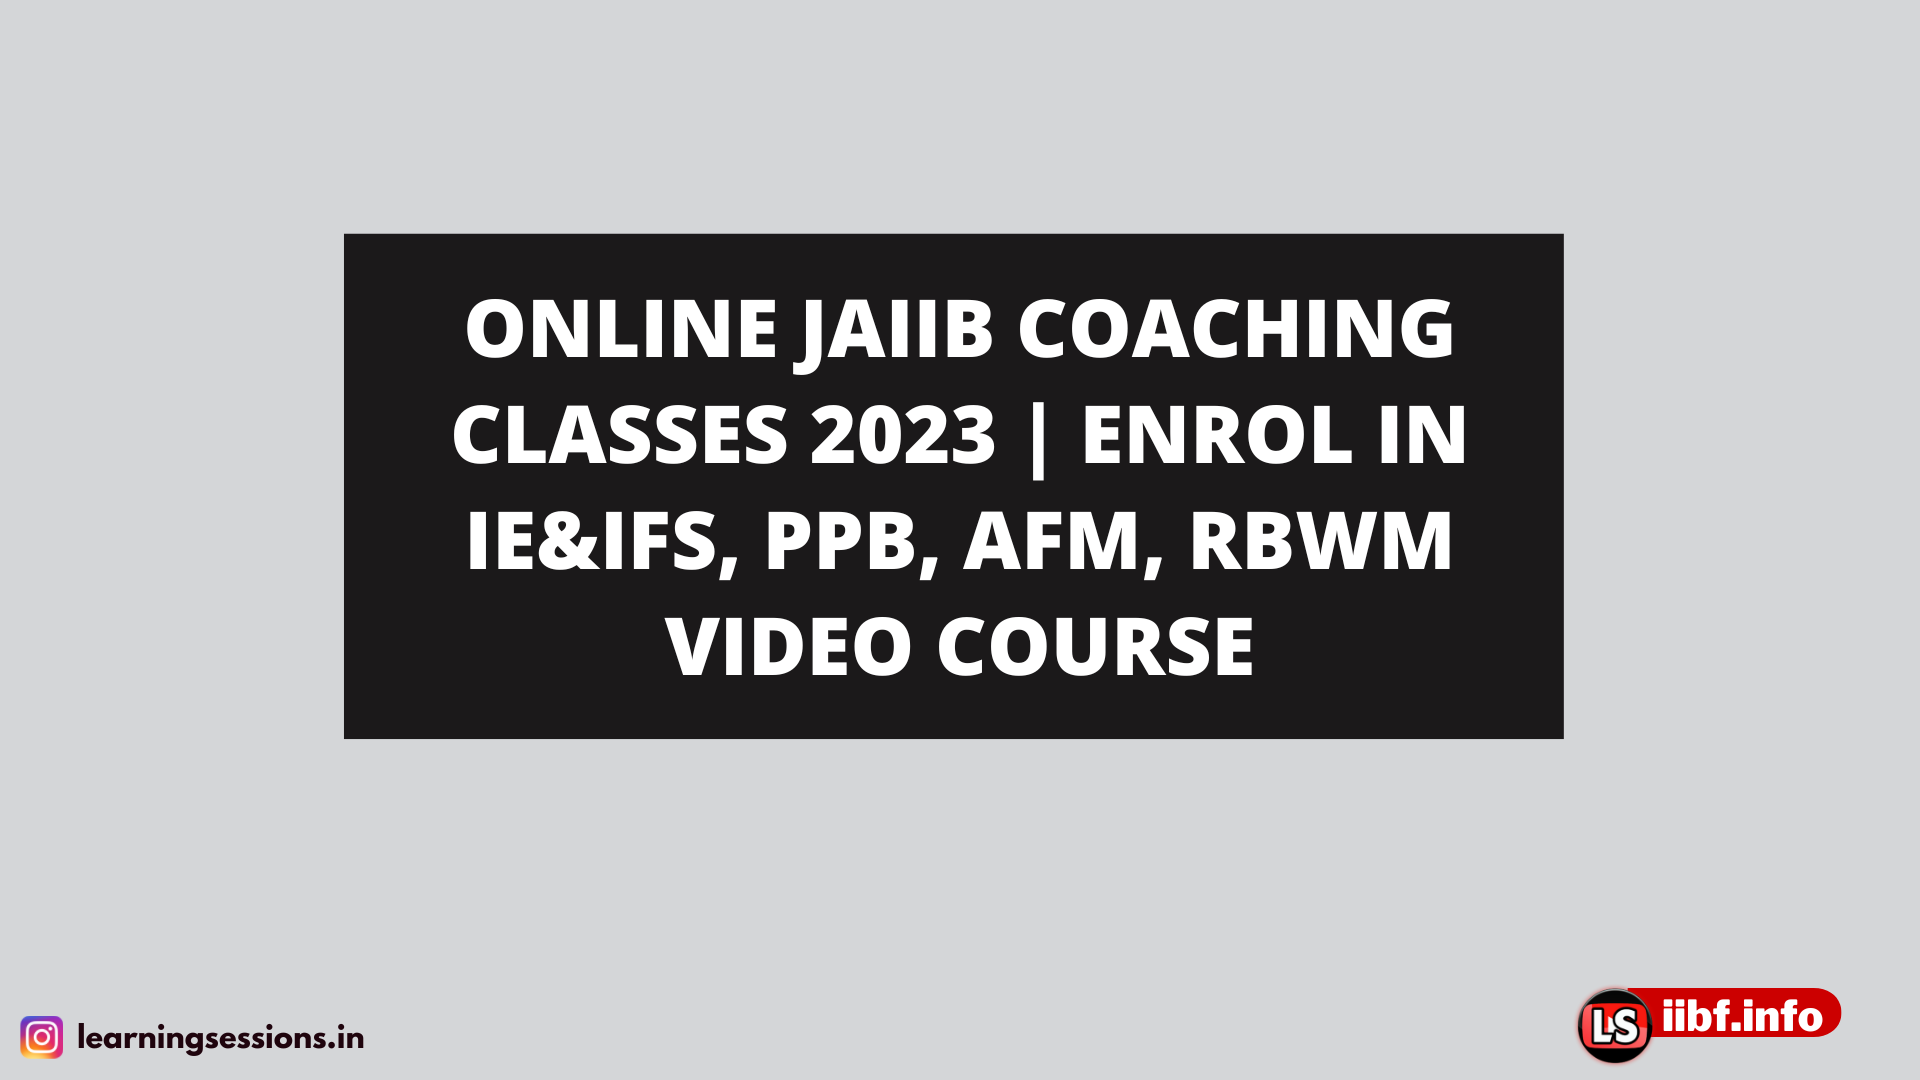 ONLINE JAIIB COACHING CLASSES 2023 | ENROL IN IE&IFS, PPB, AFM, RBWM VIDEO COURSE